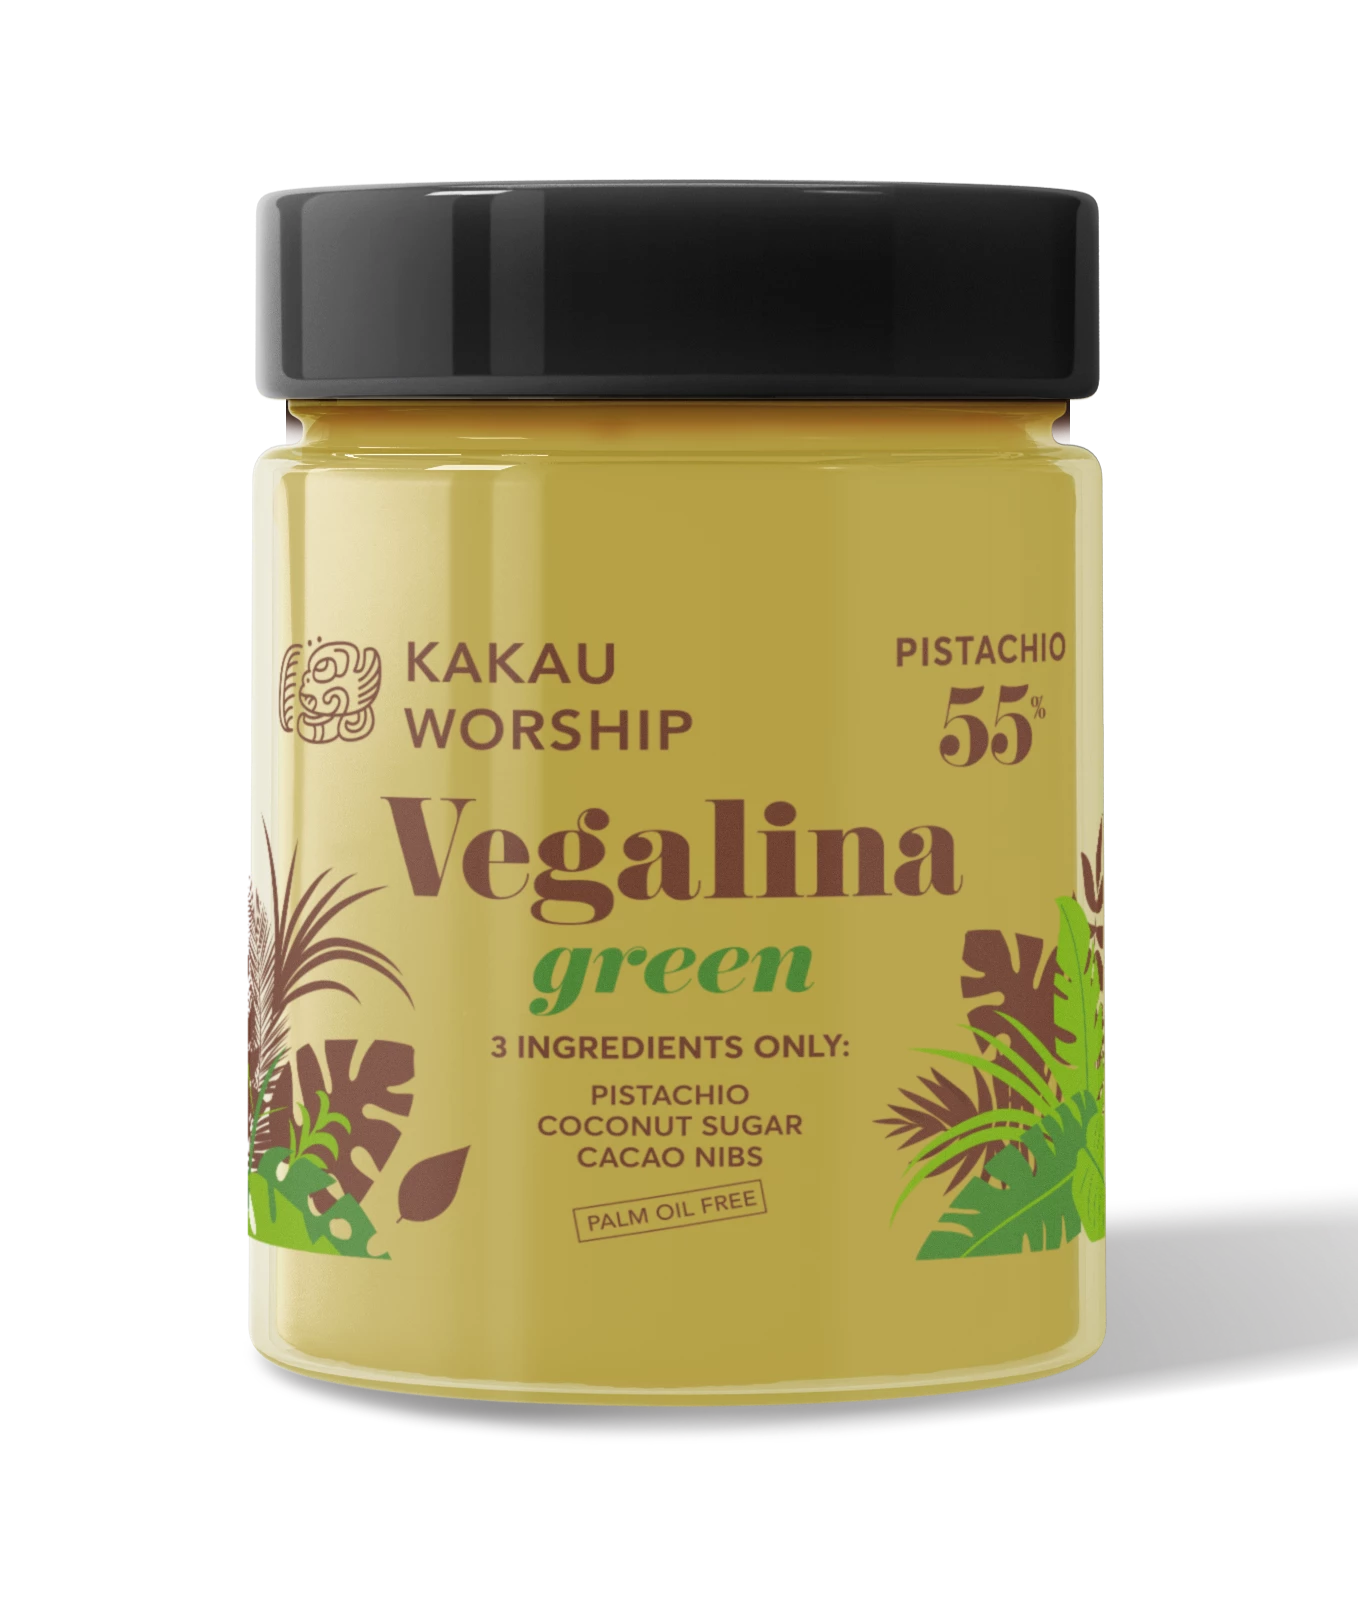 Vegalina - Green Pistachio 